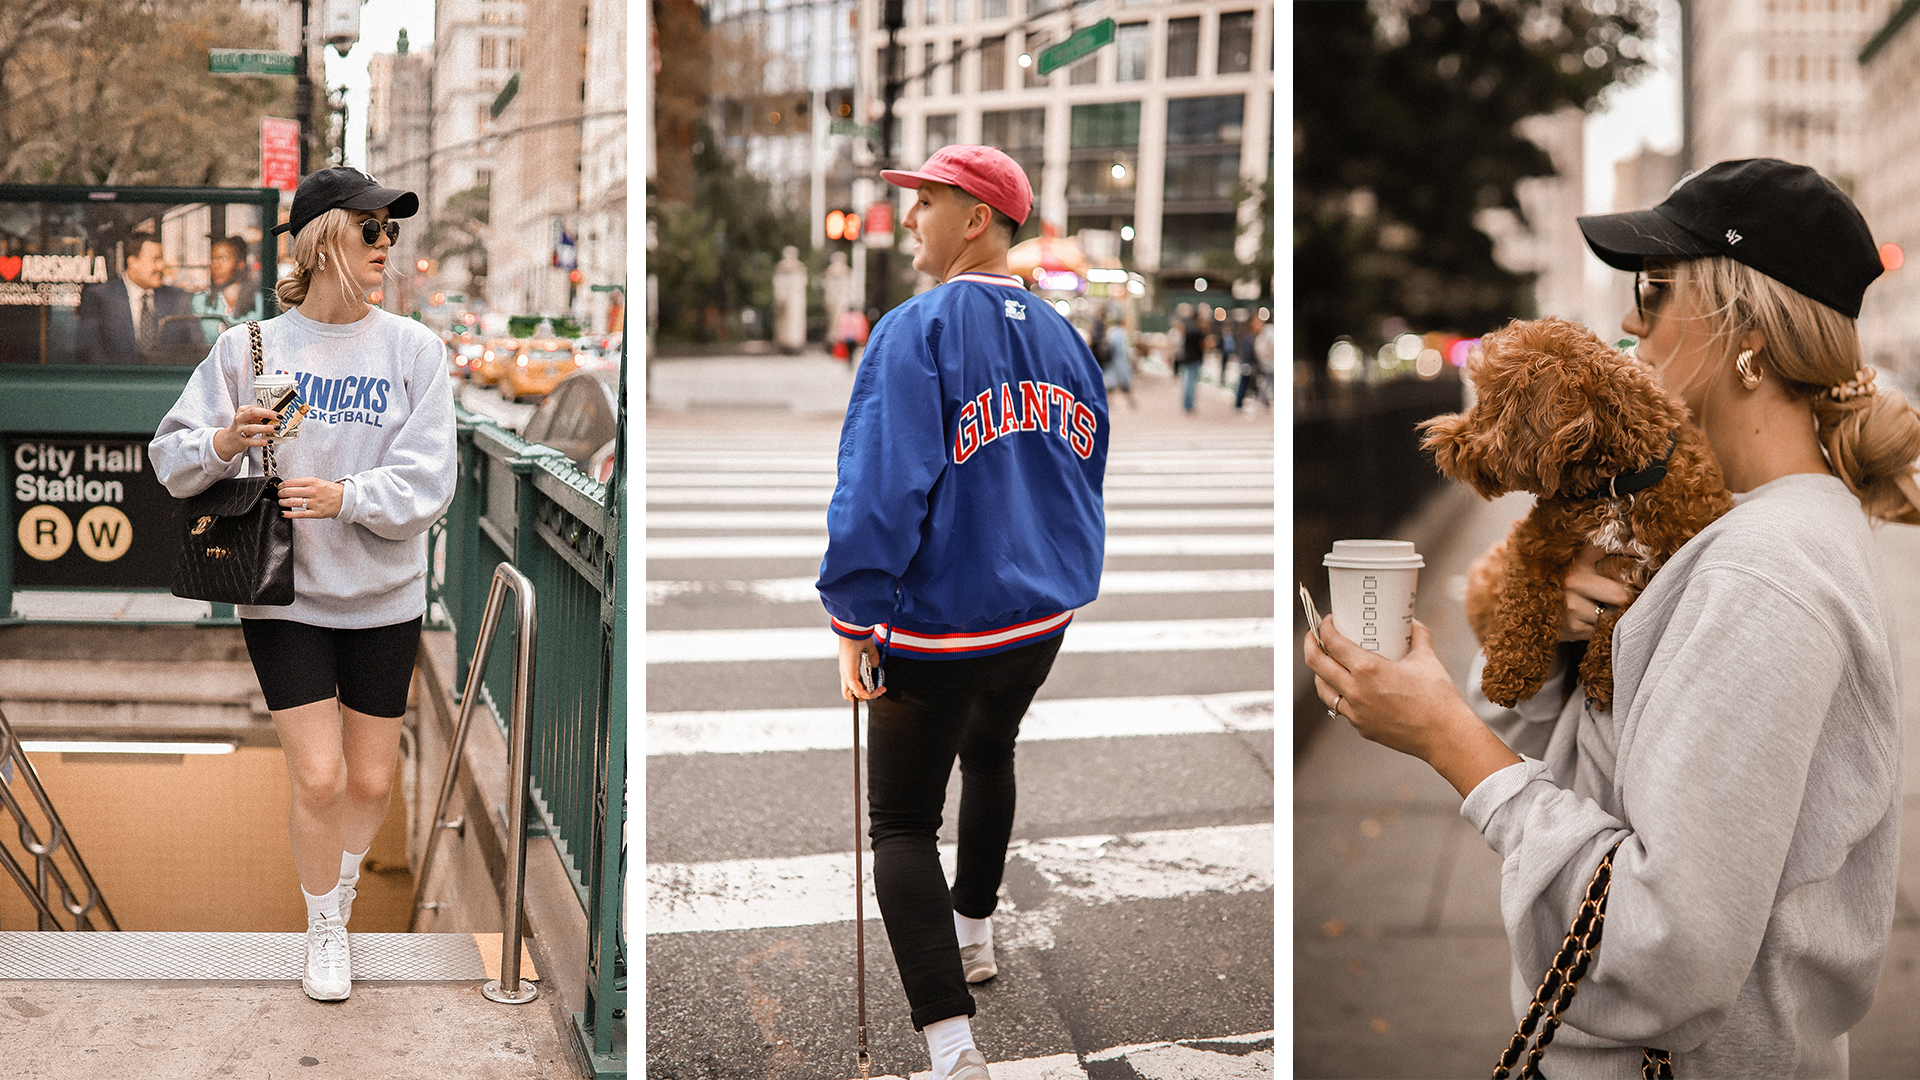 Anna and Nathan wearing vintage clothing walking through New York City.